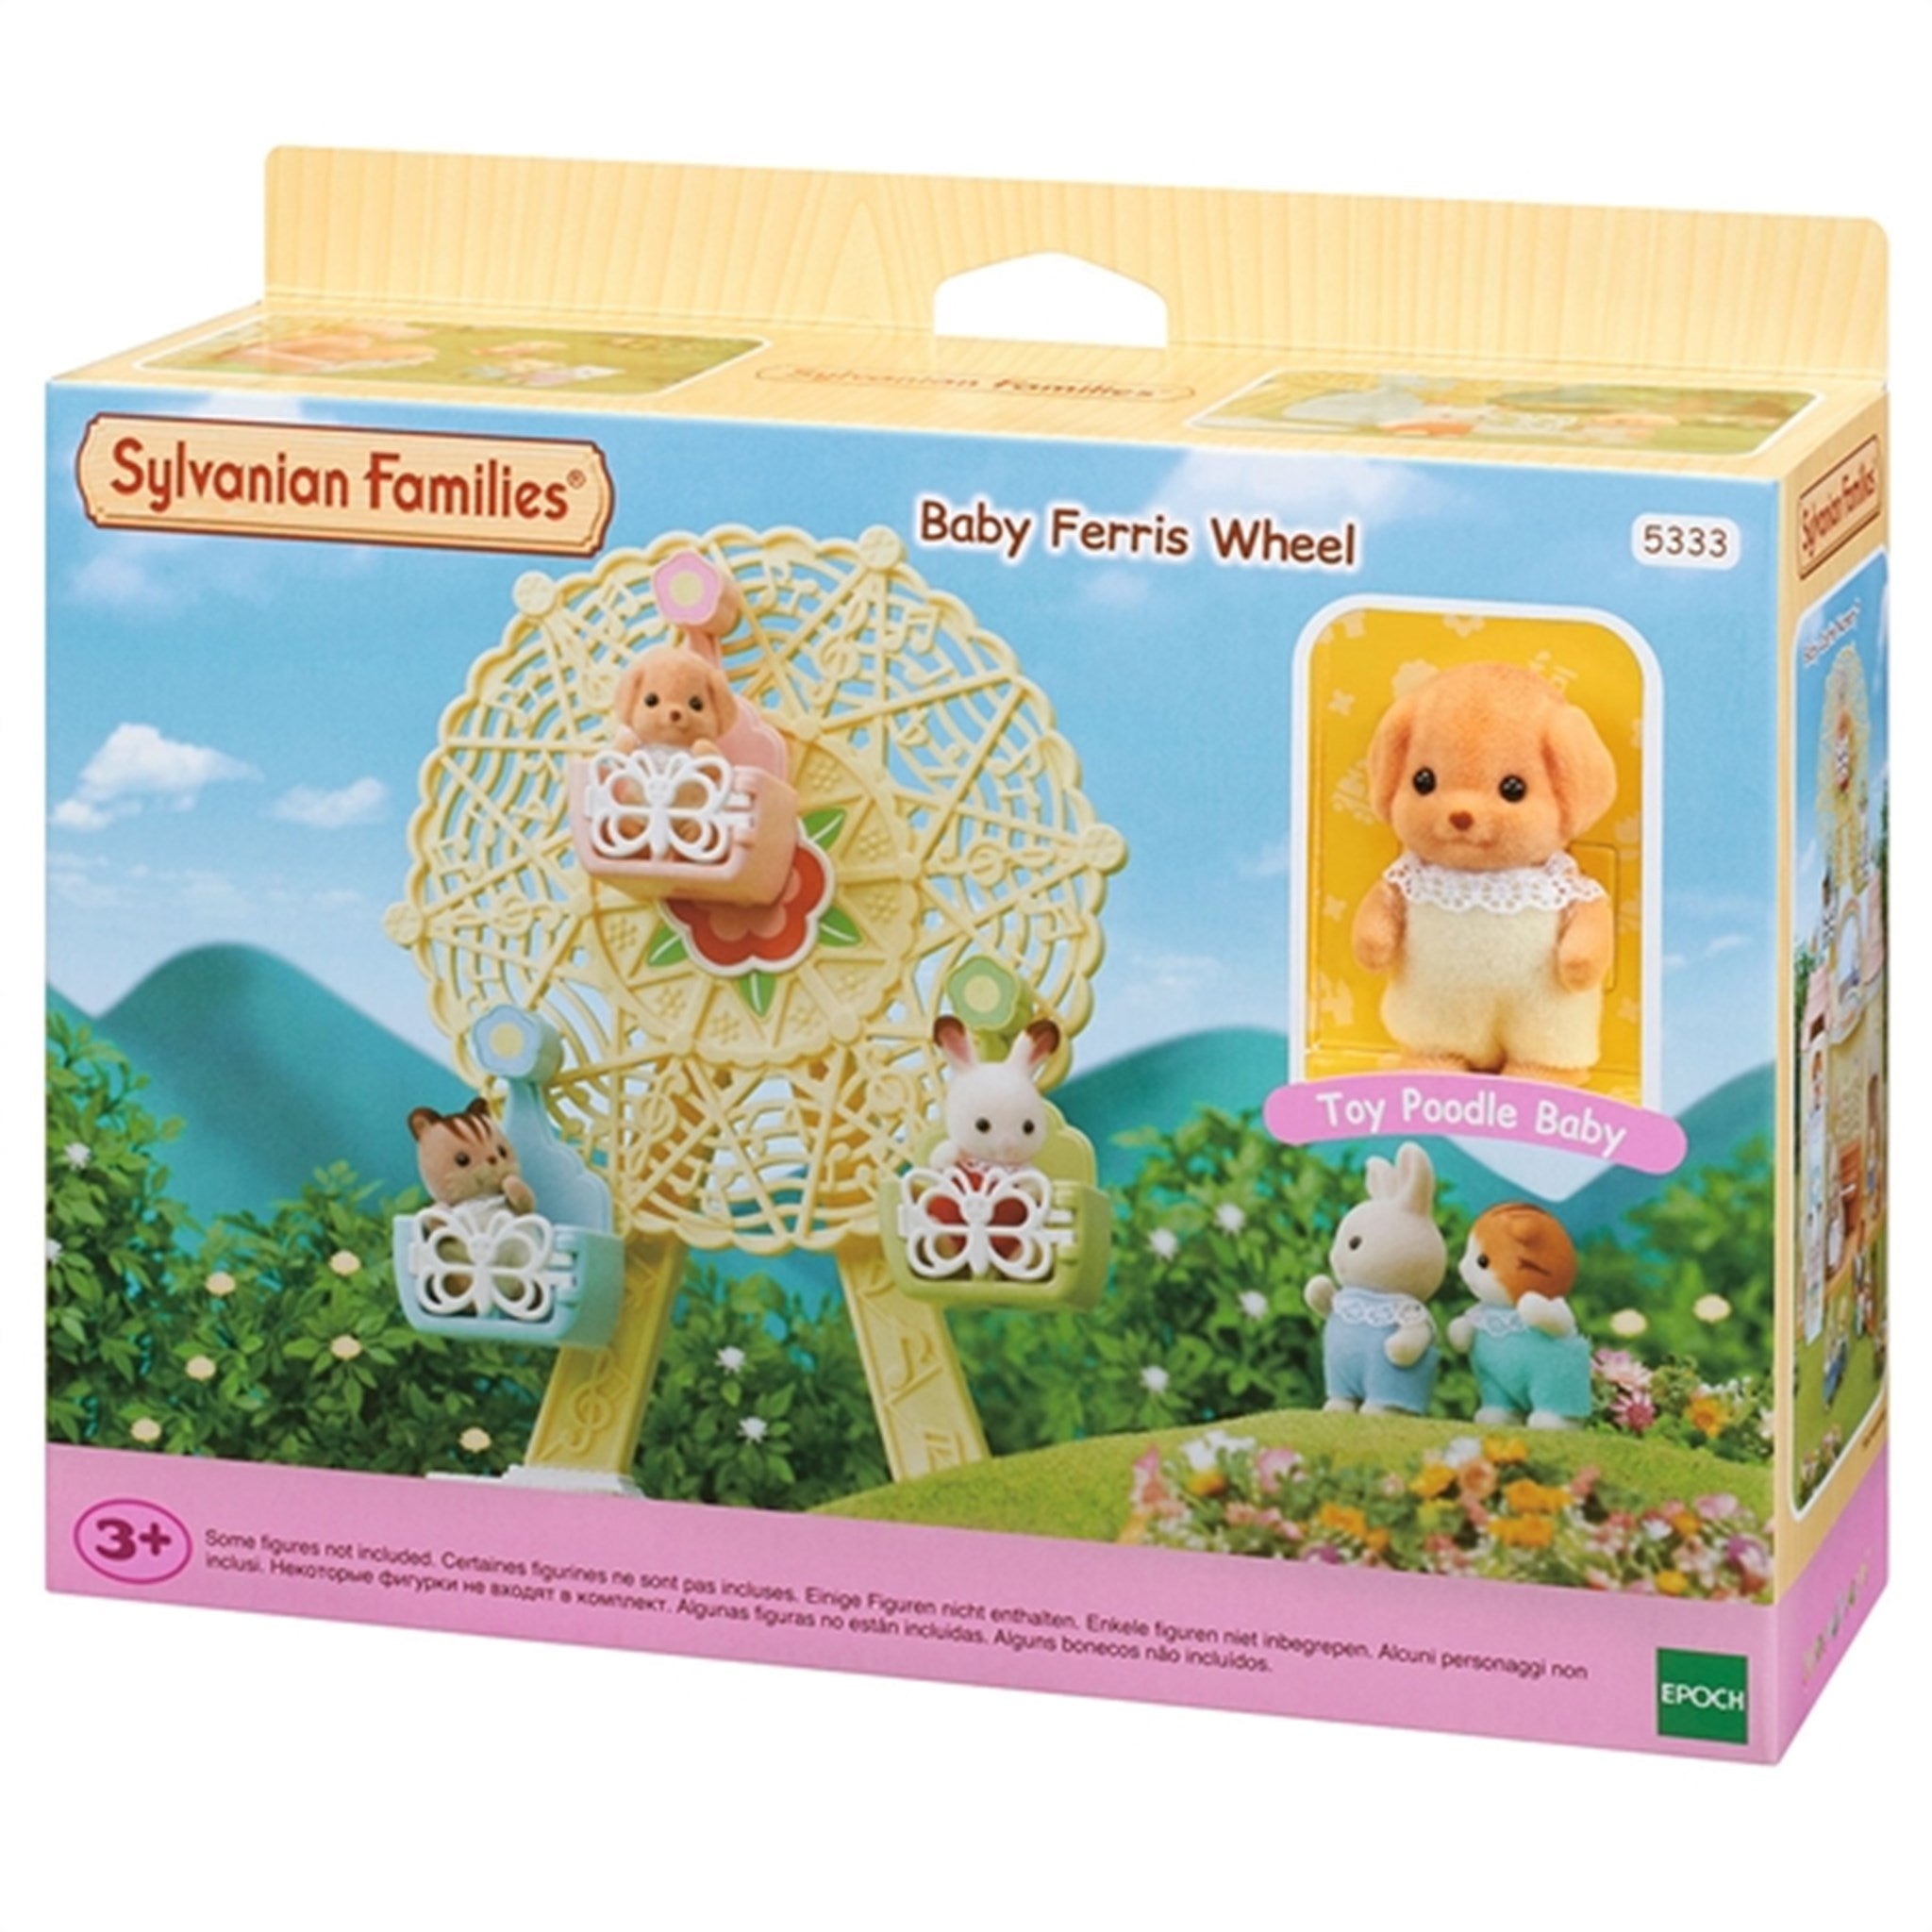 Sylvanian Families® Baby Ferris Wheel